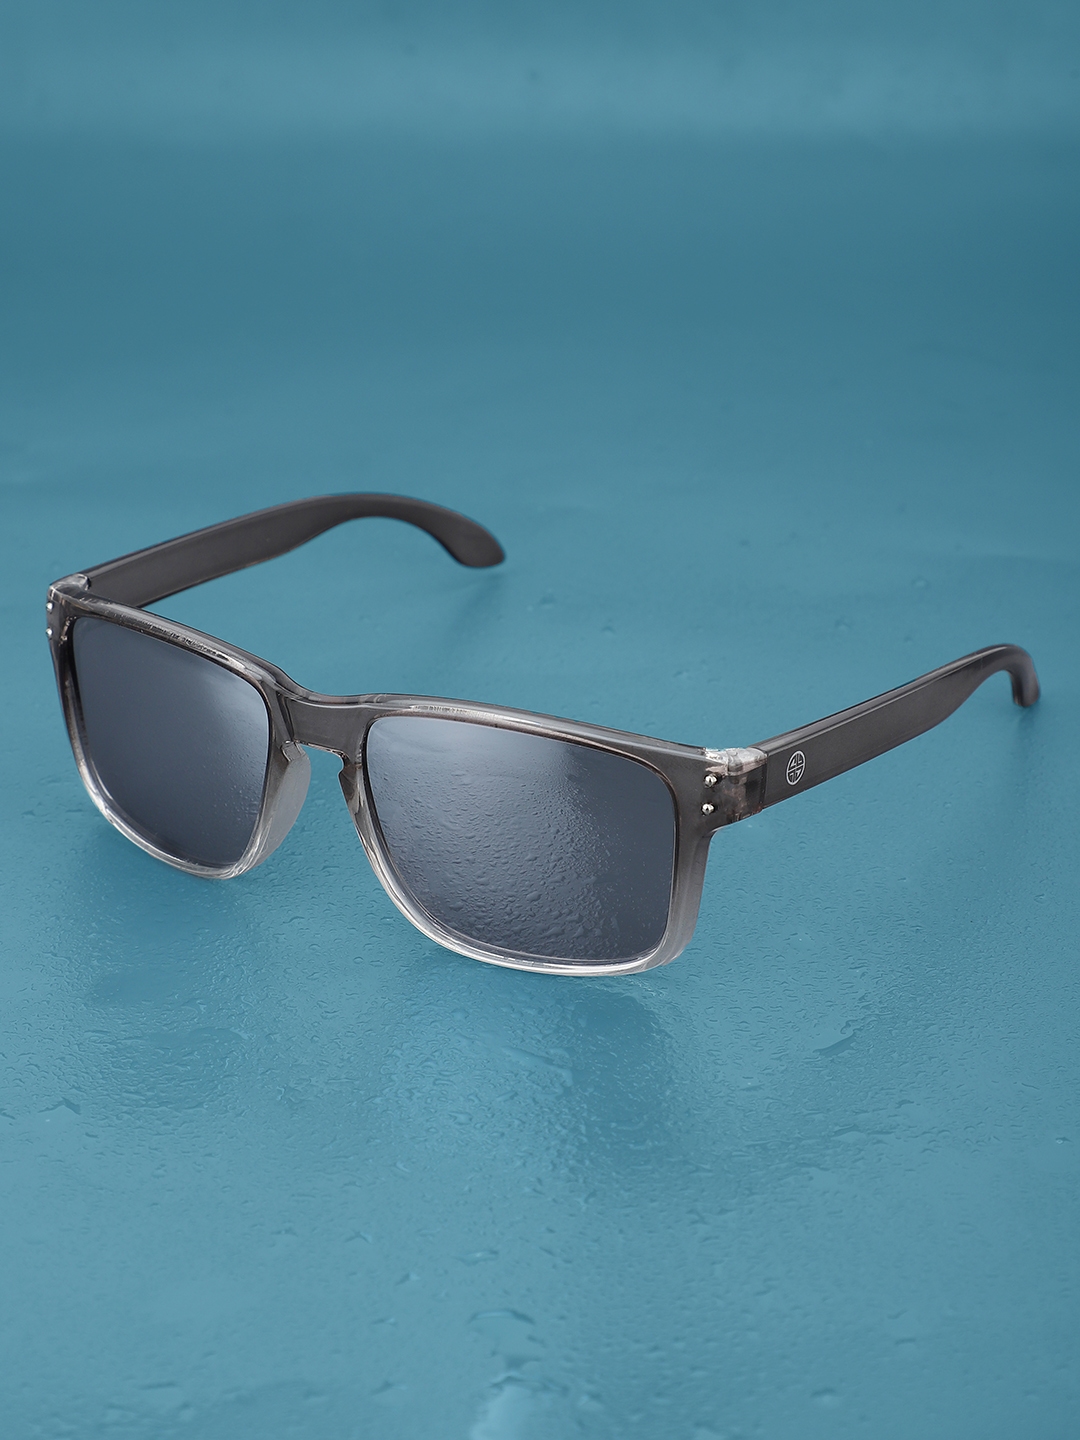 Carlton London Wayfarer Sunglasses With UV Protected Lens For